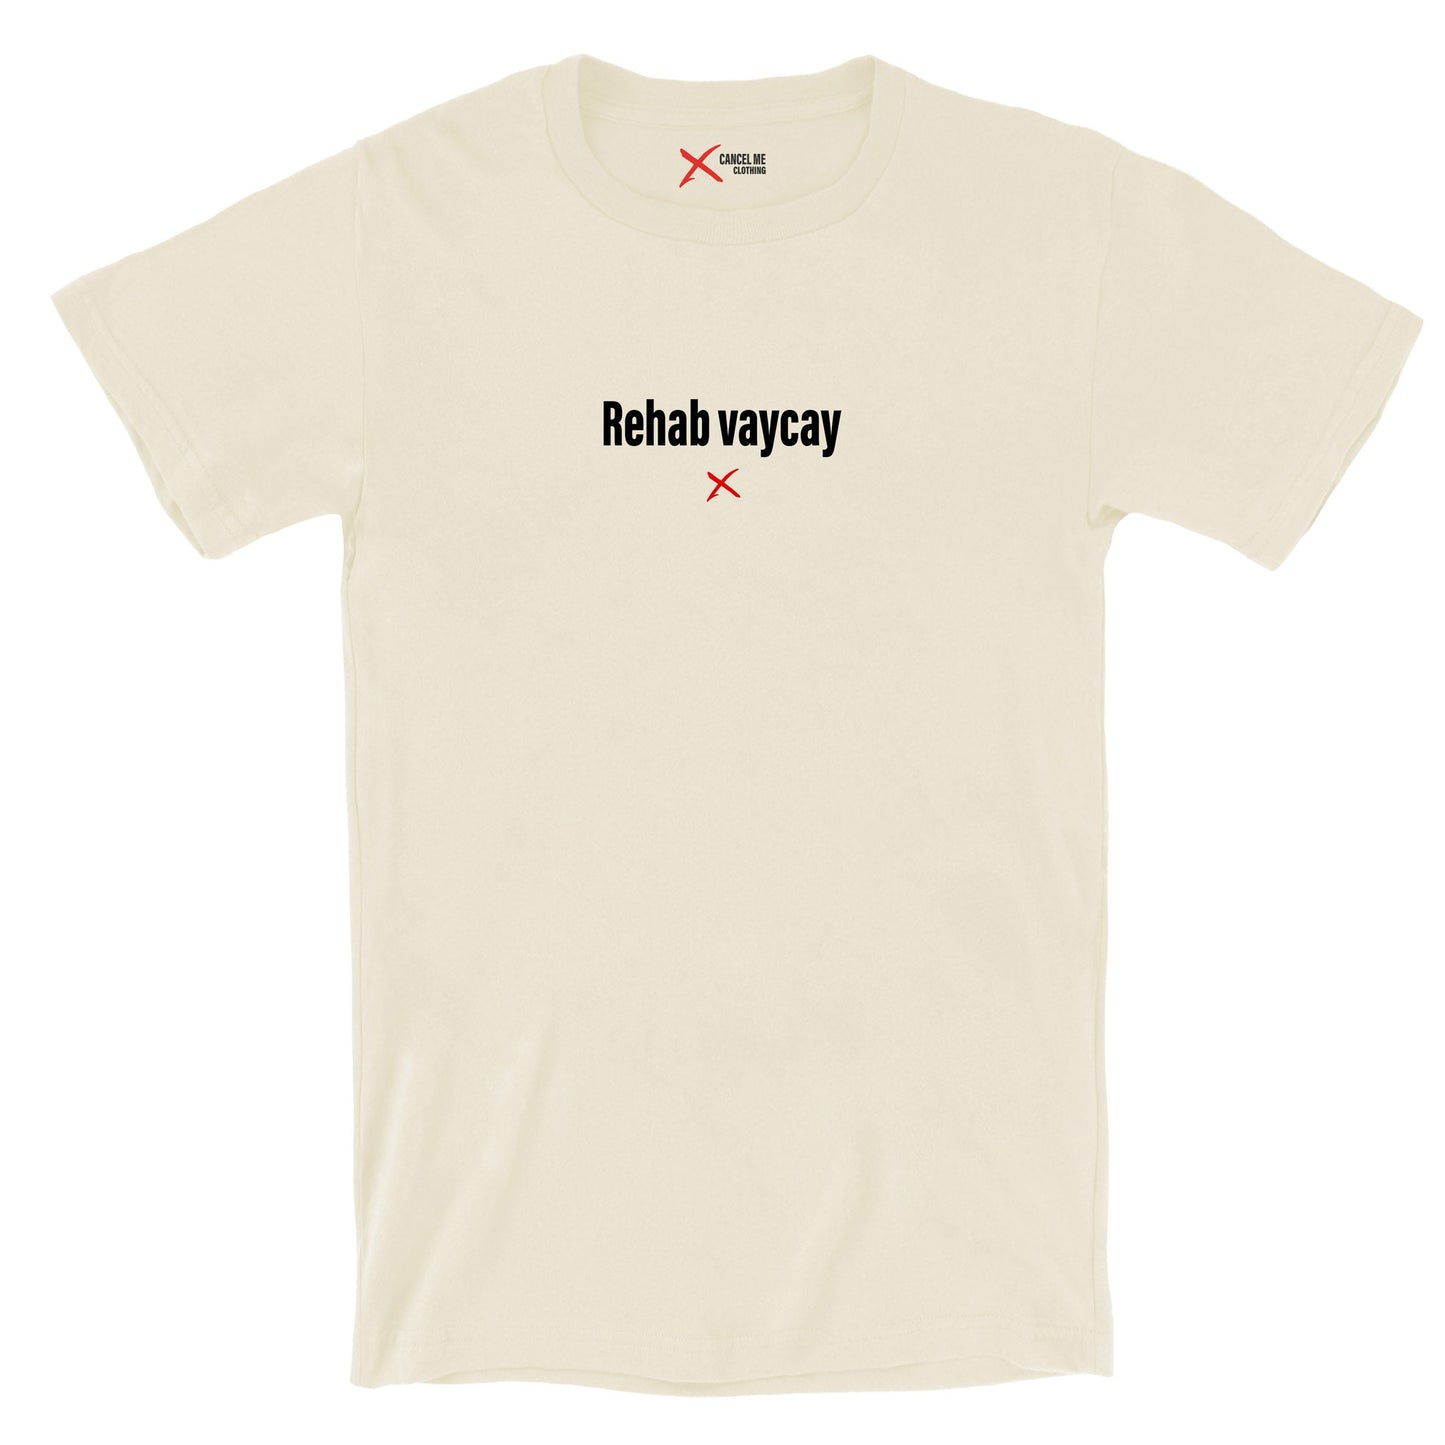 Rehab vaycay - Shirt